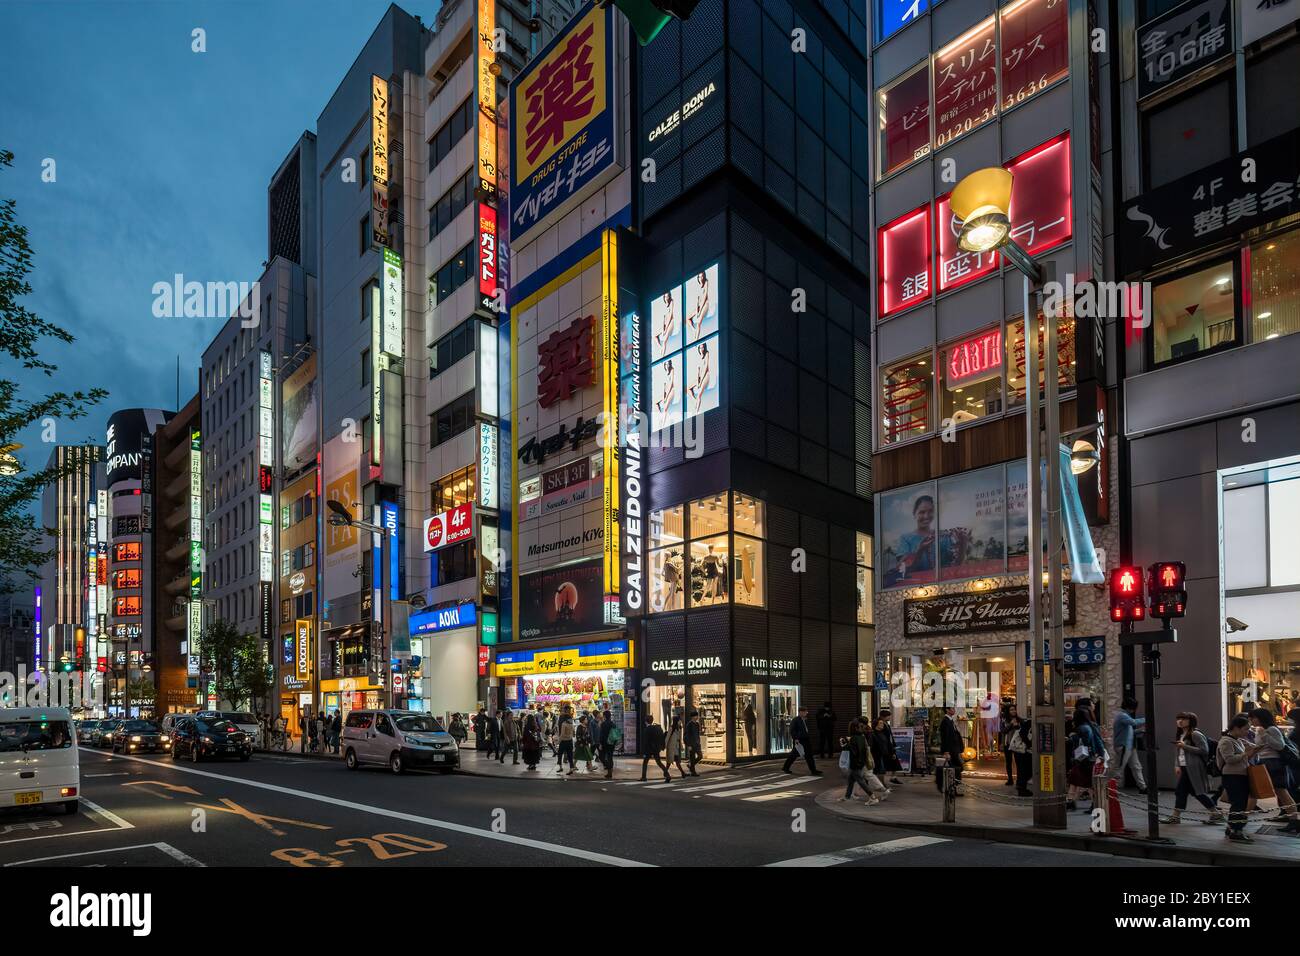 Tokyo Japan October 31st 2016 : Neon illuminated shops in the Shinjuku district of Tokyo, Japan at dusk Stock Photo